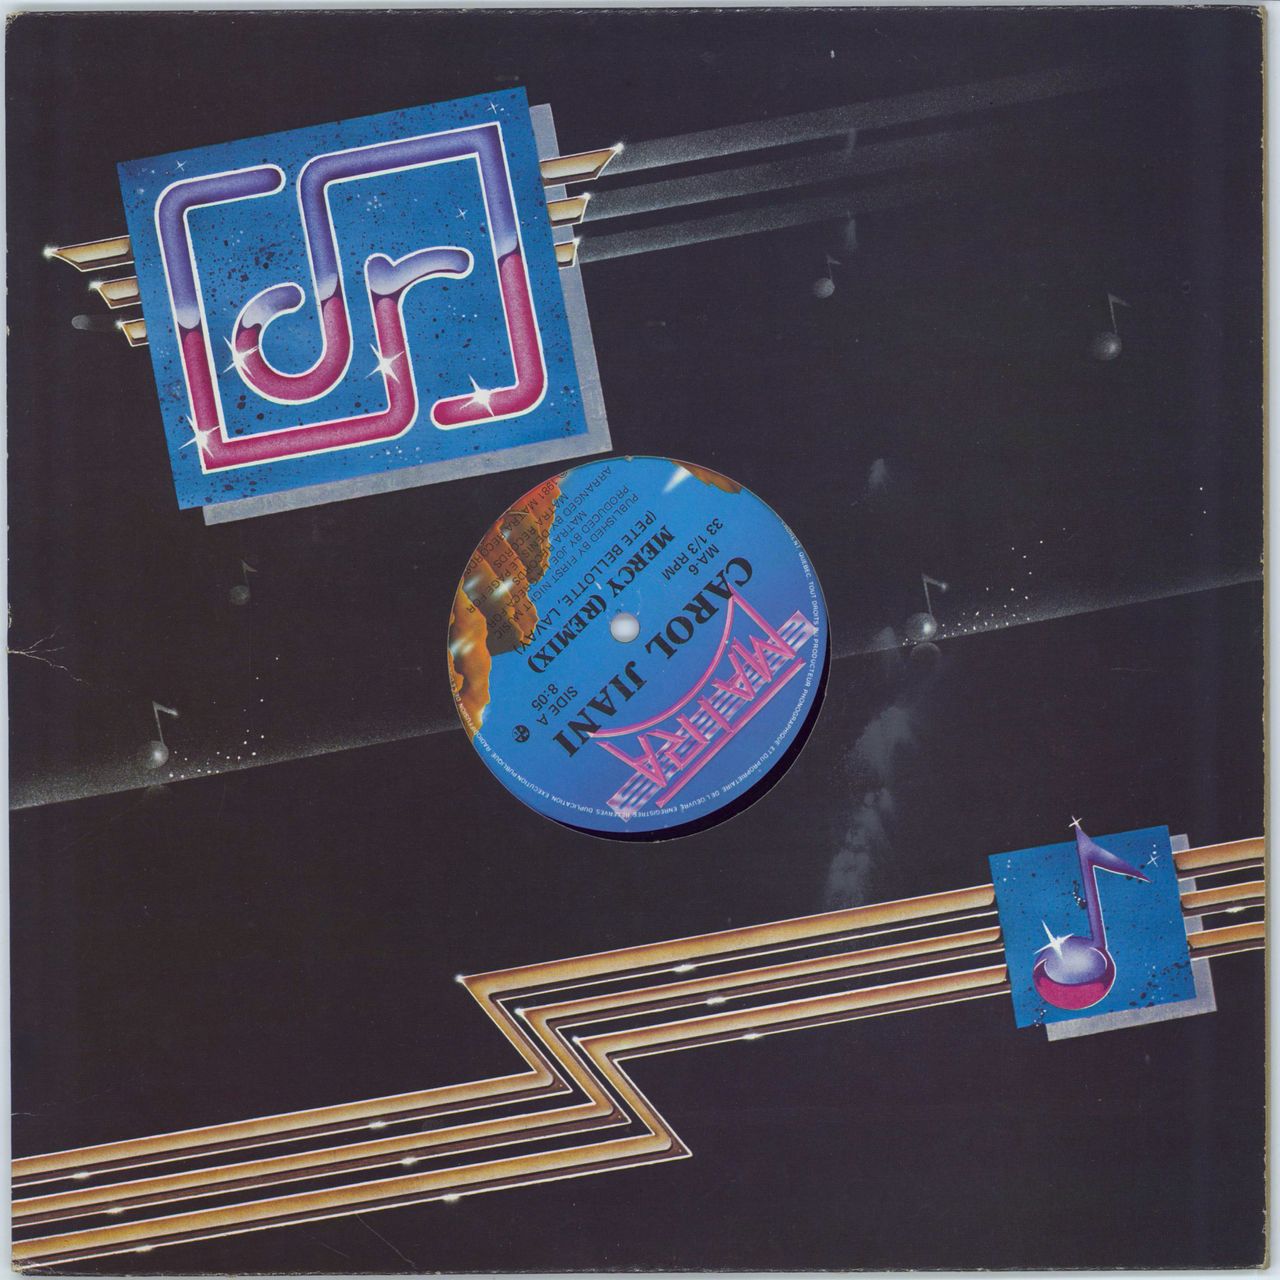 Carol Jiani Mercy (Remix) Canadian 12" vinyl single (12 inch record / Maxi-single) MA-6